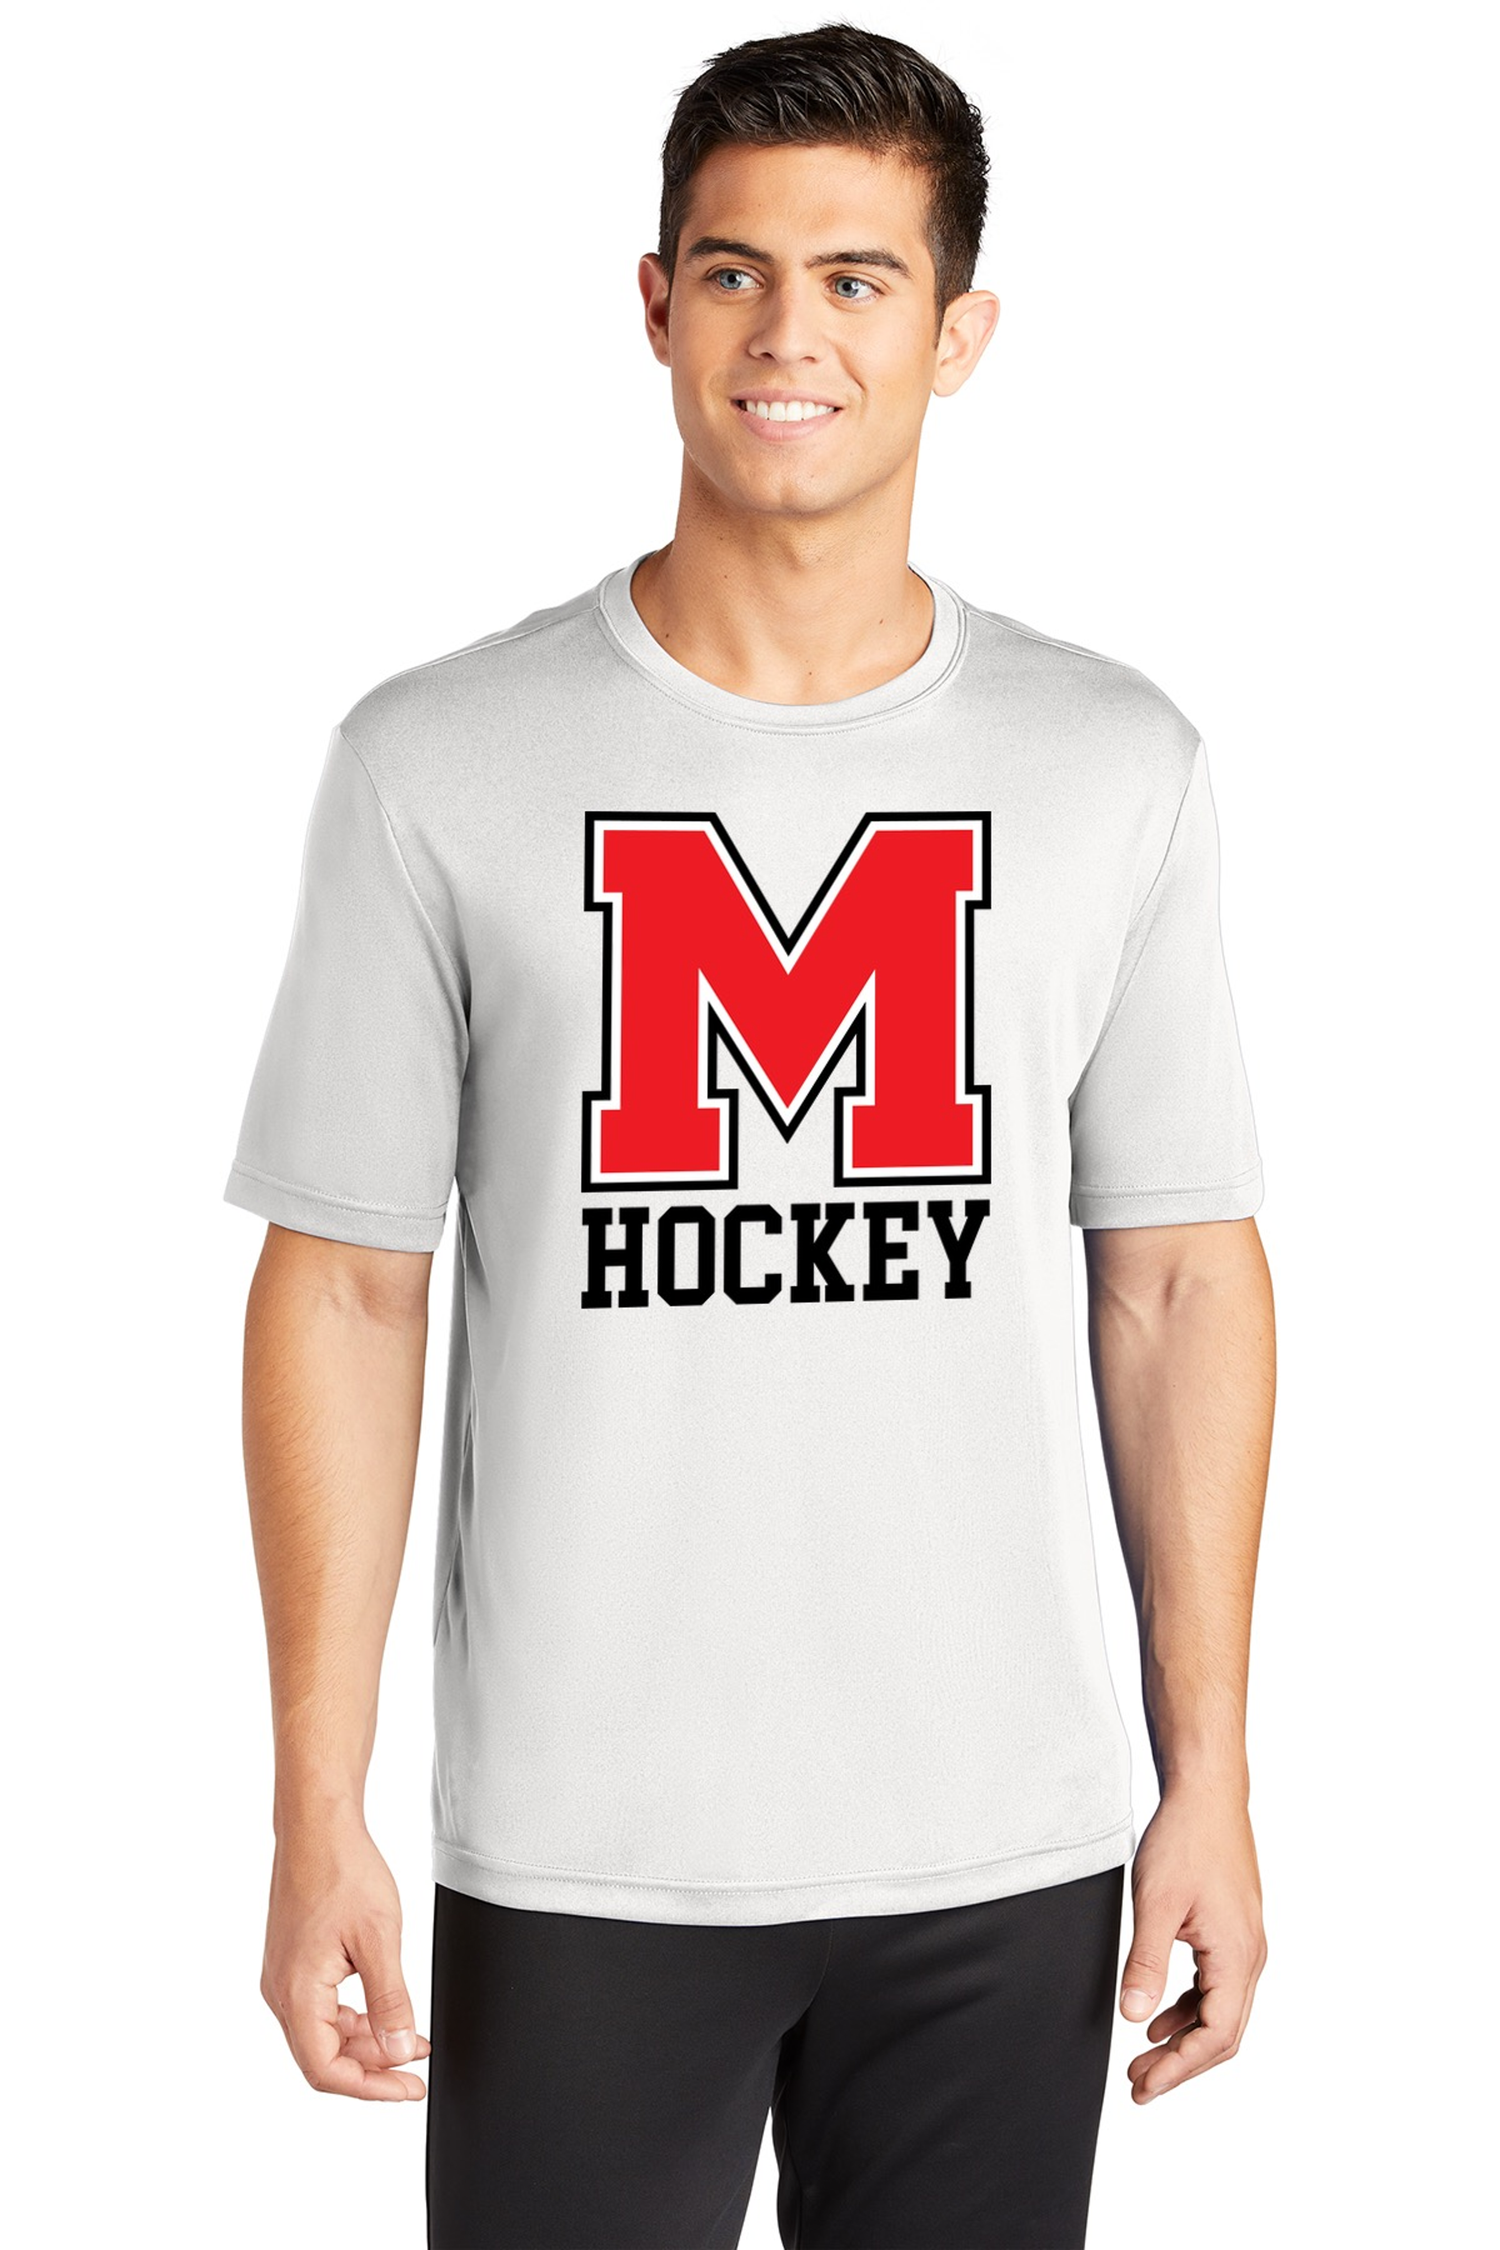 MHS Girls Hockey Performance Tee Shirt